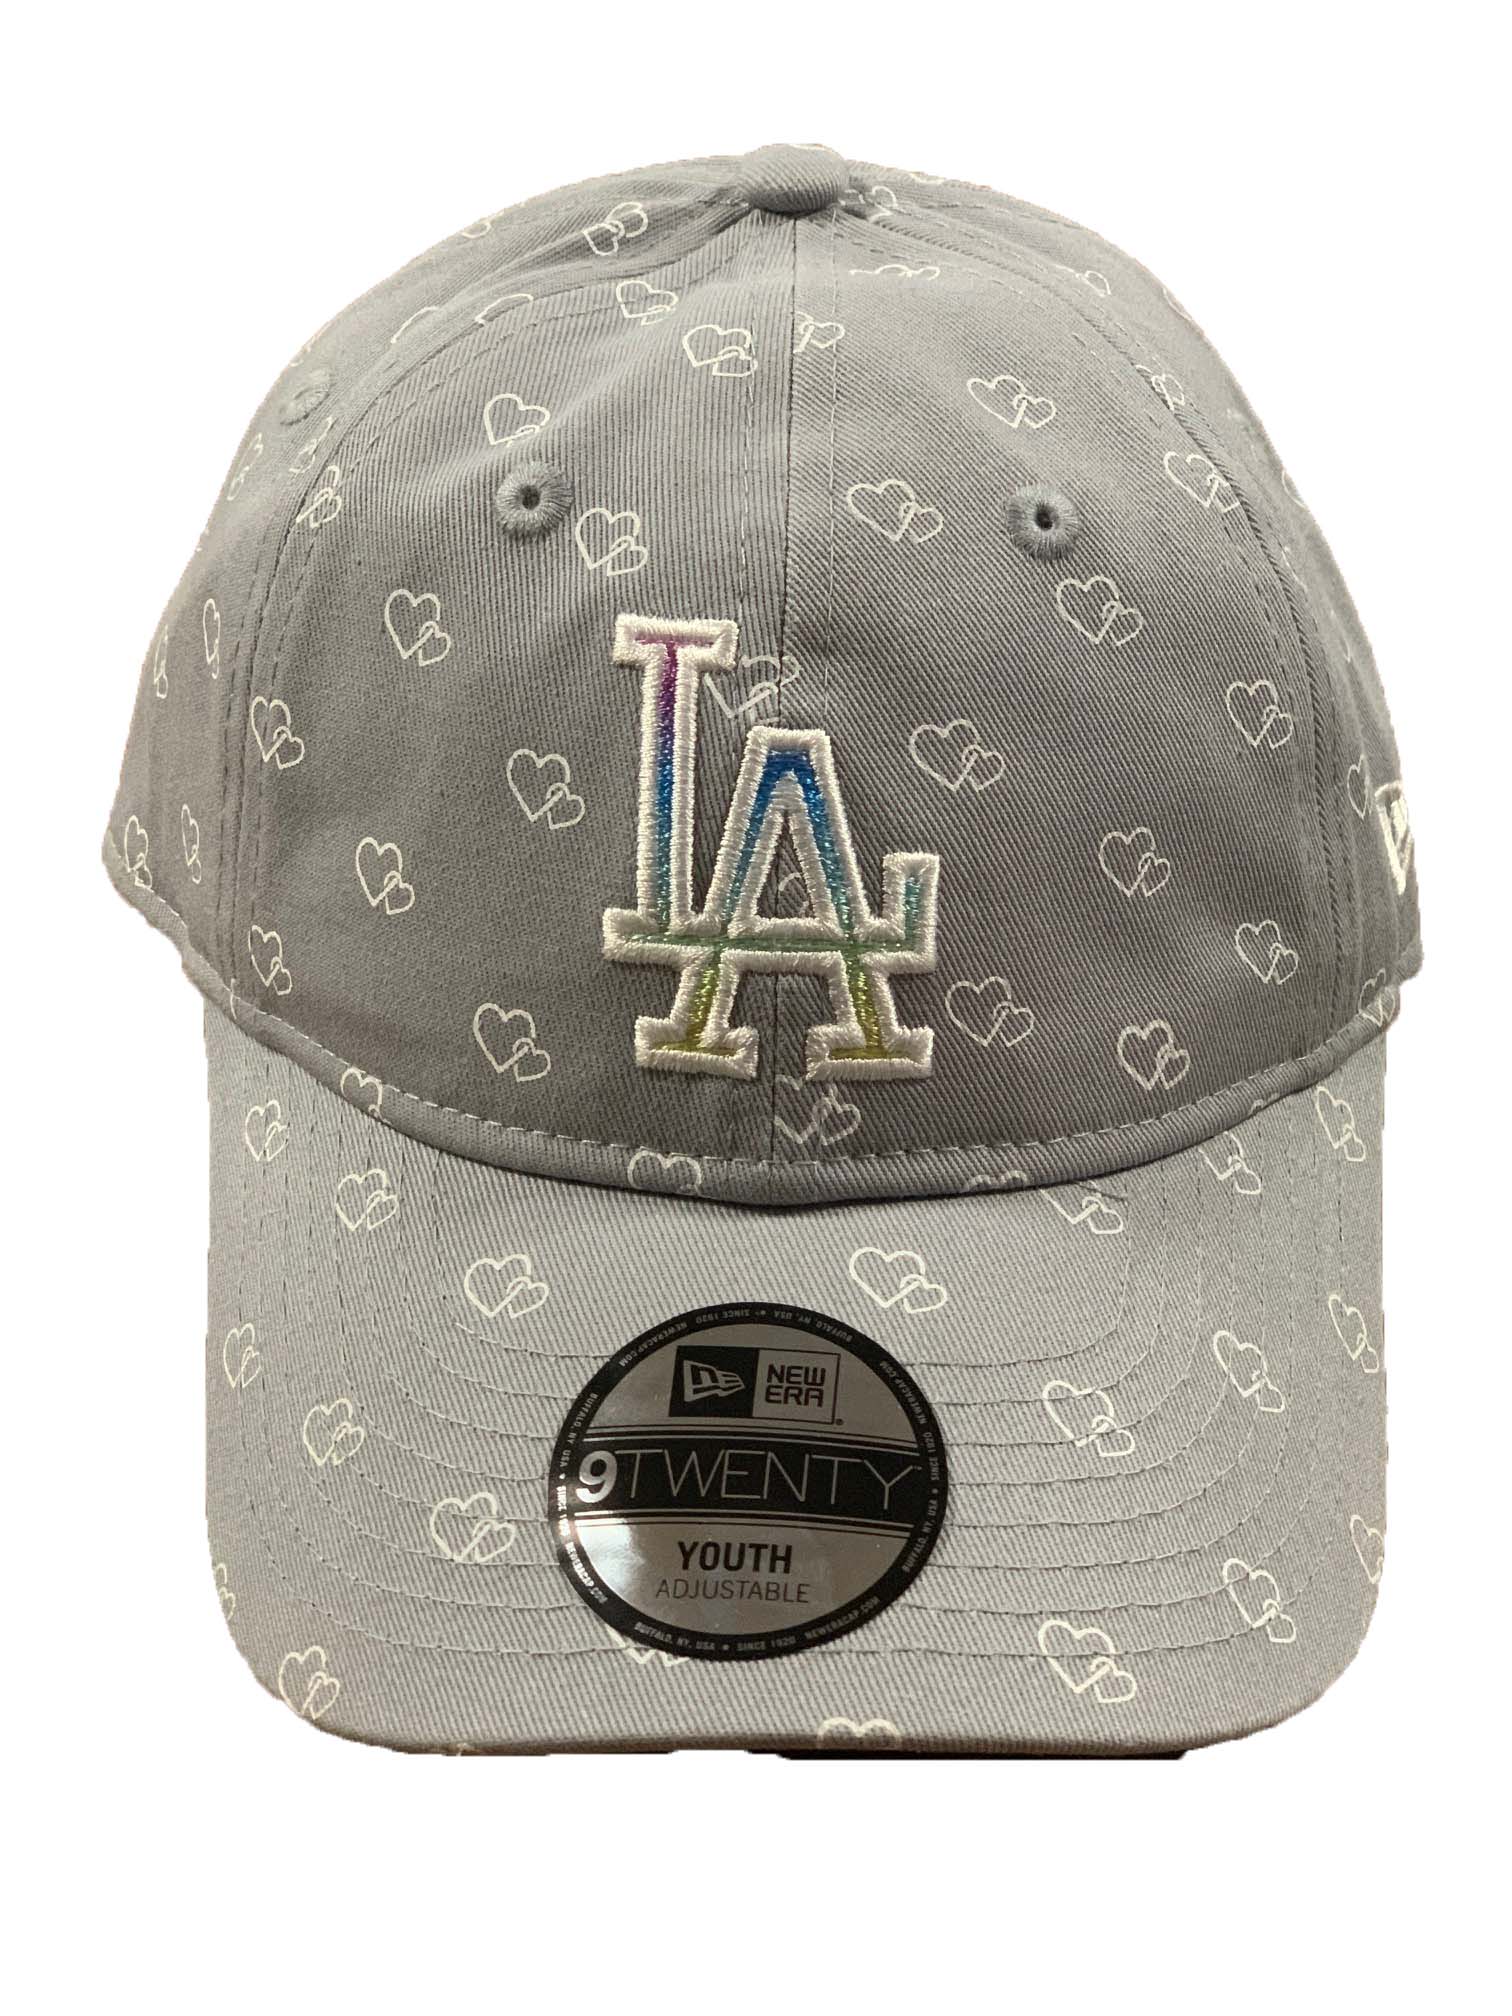 Los Angeles Dodgers 9TWENTY Cloth Strap Pink  Dodgers, Los angeles dodgers  logo, Hats for women